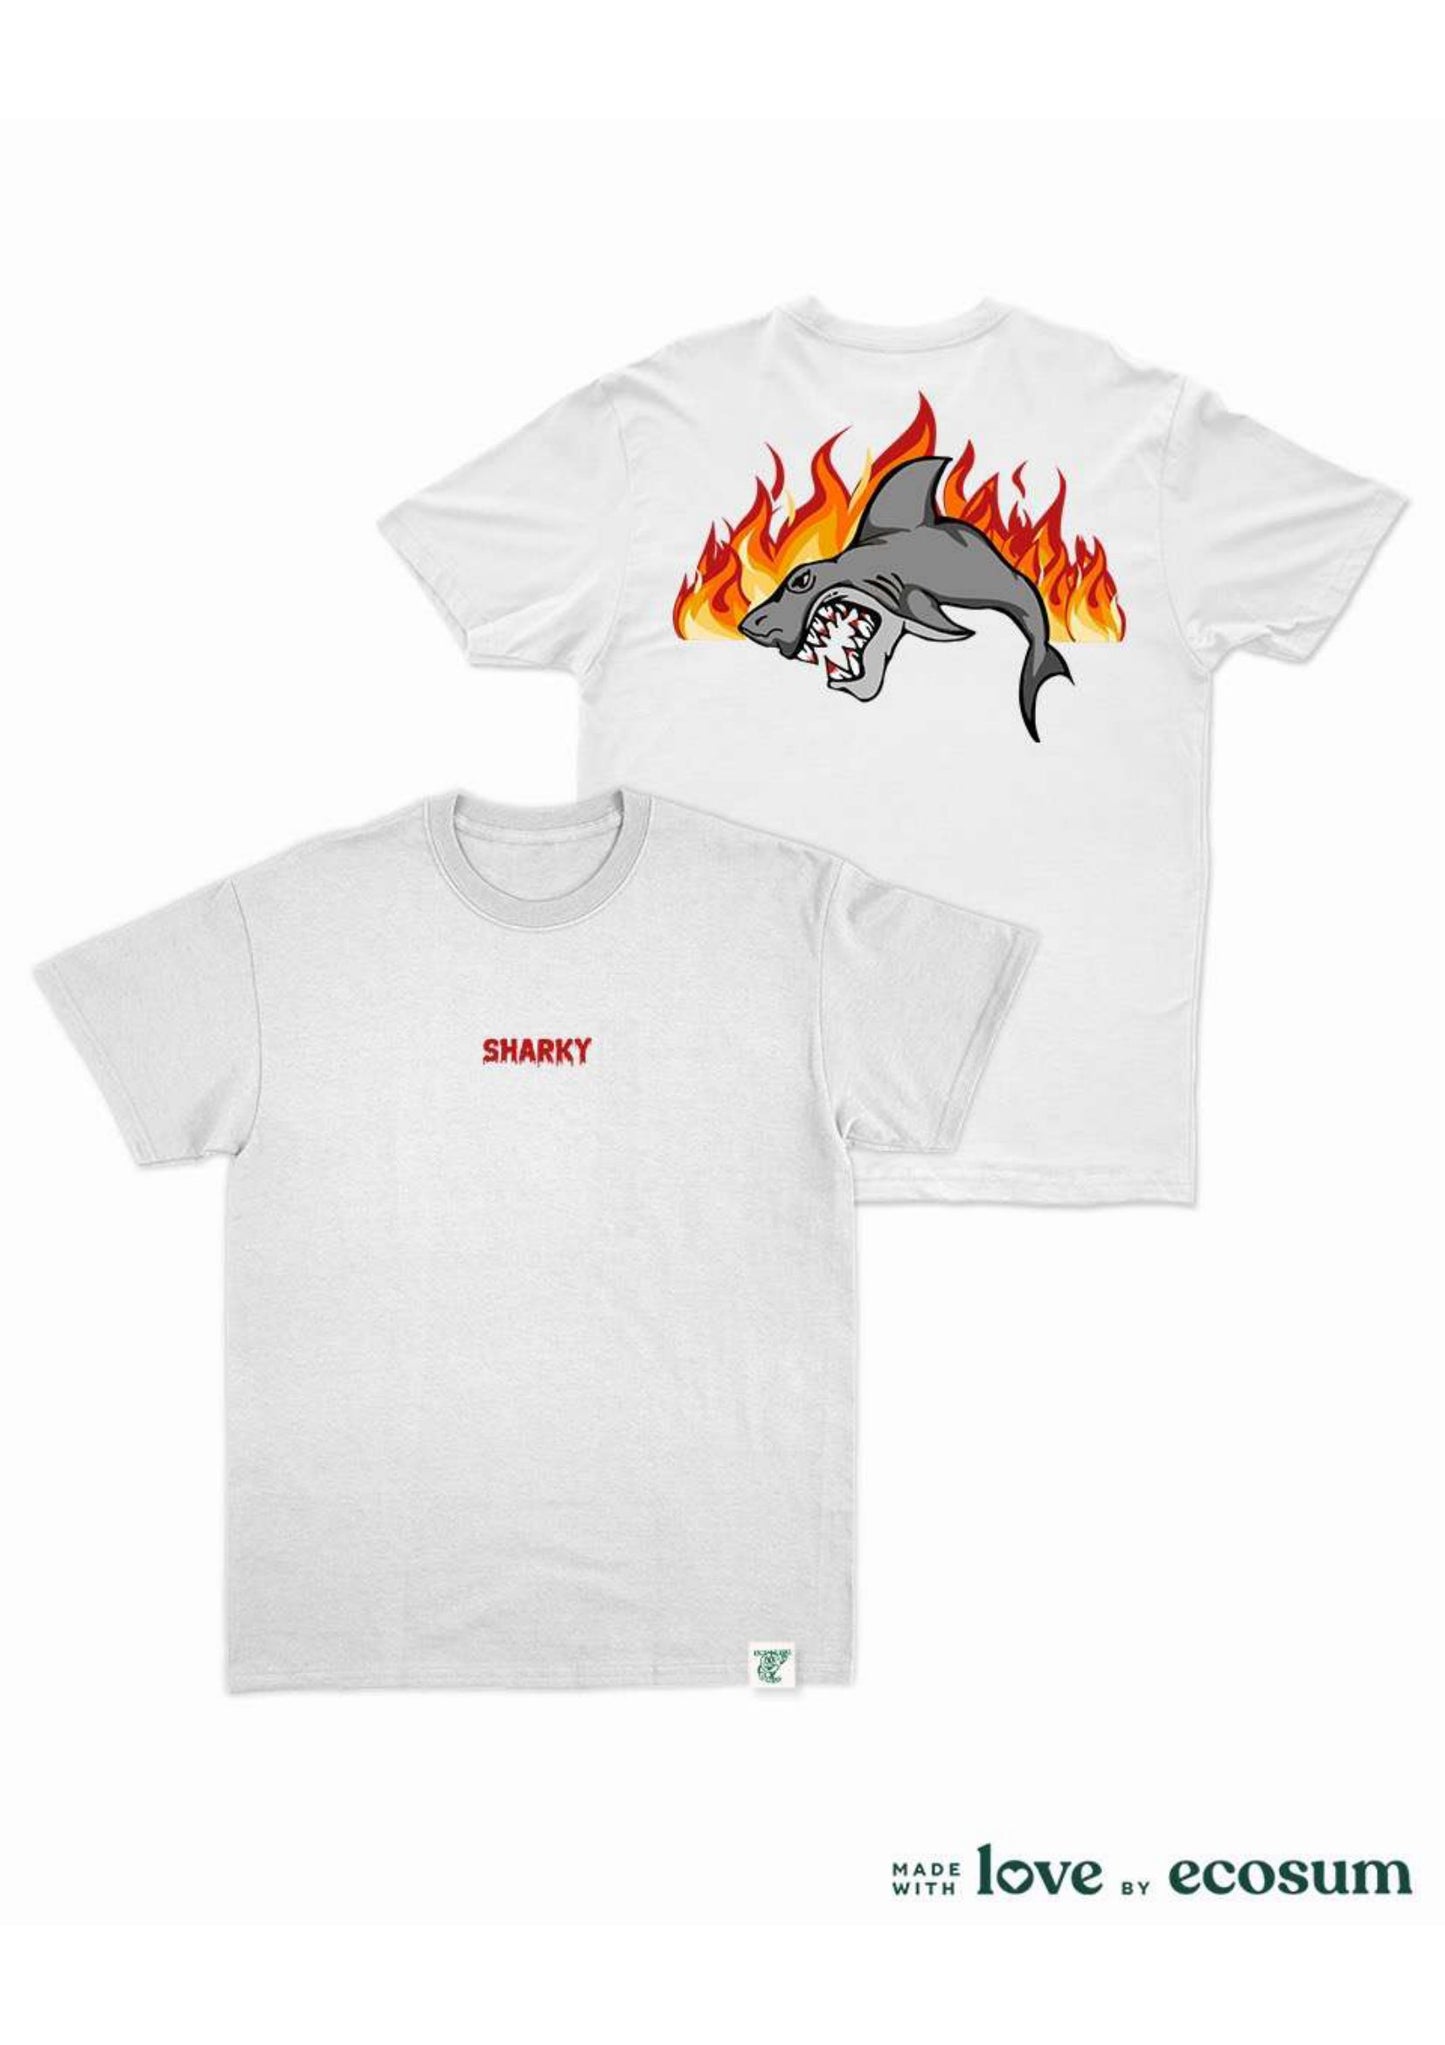 T-shirt Sharky - back&front